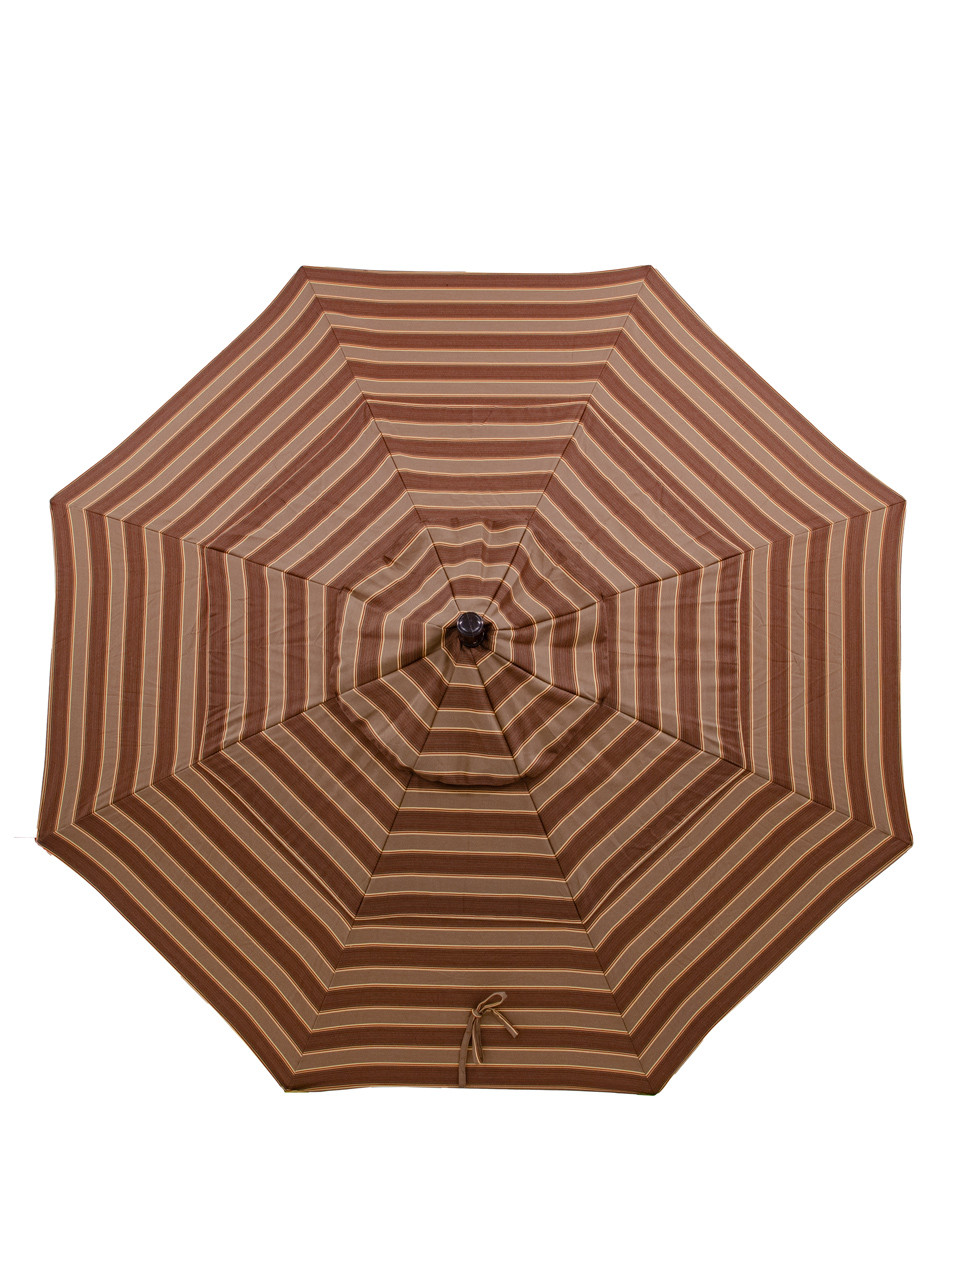 California Umbrella 9 ft. Davidson Redwood Canopy and Bronze Aluminum Market Umbrella